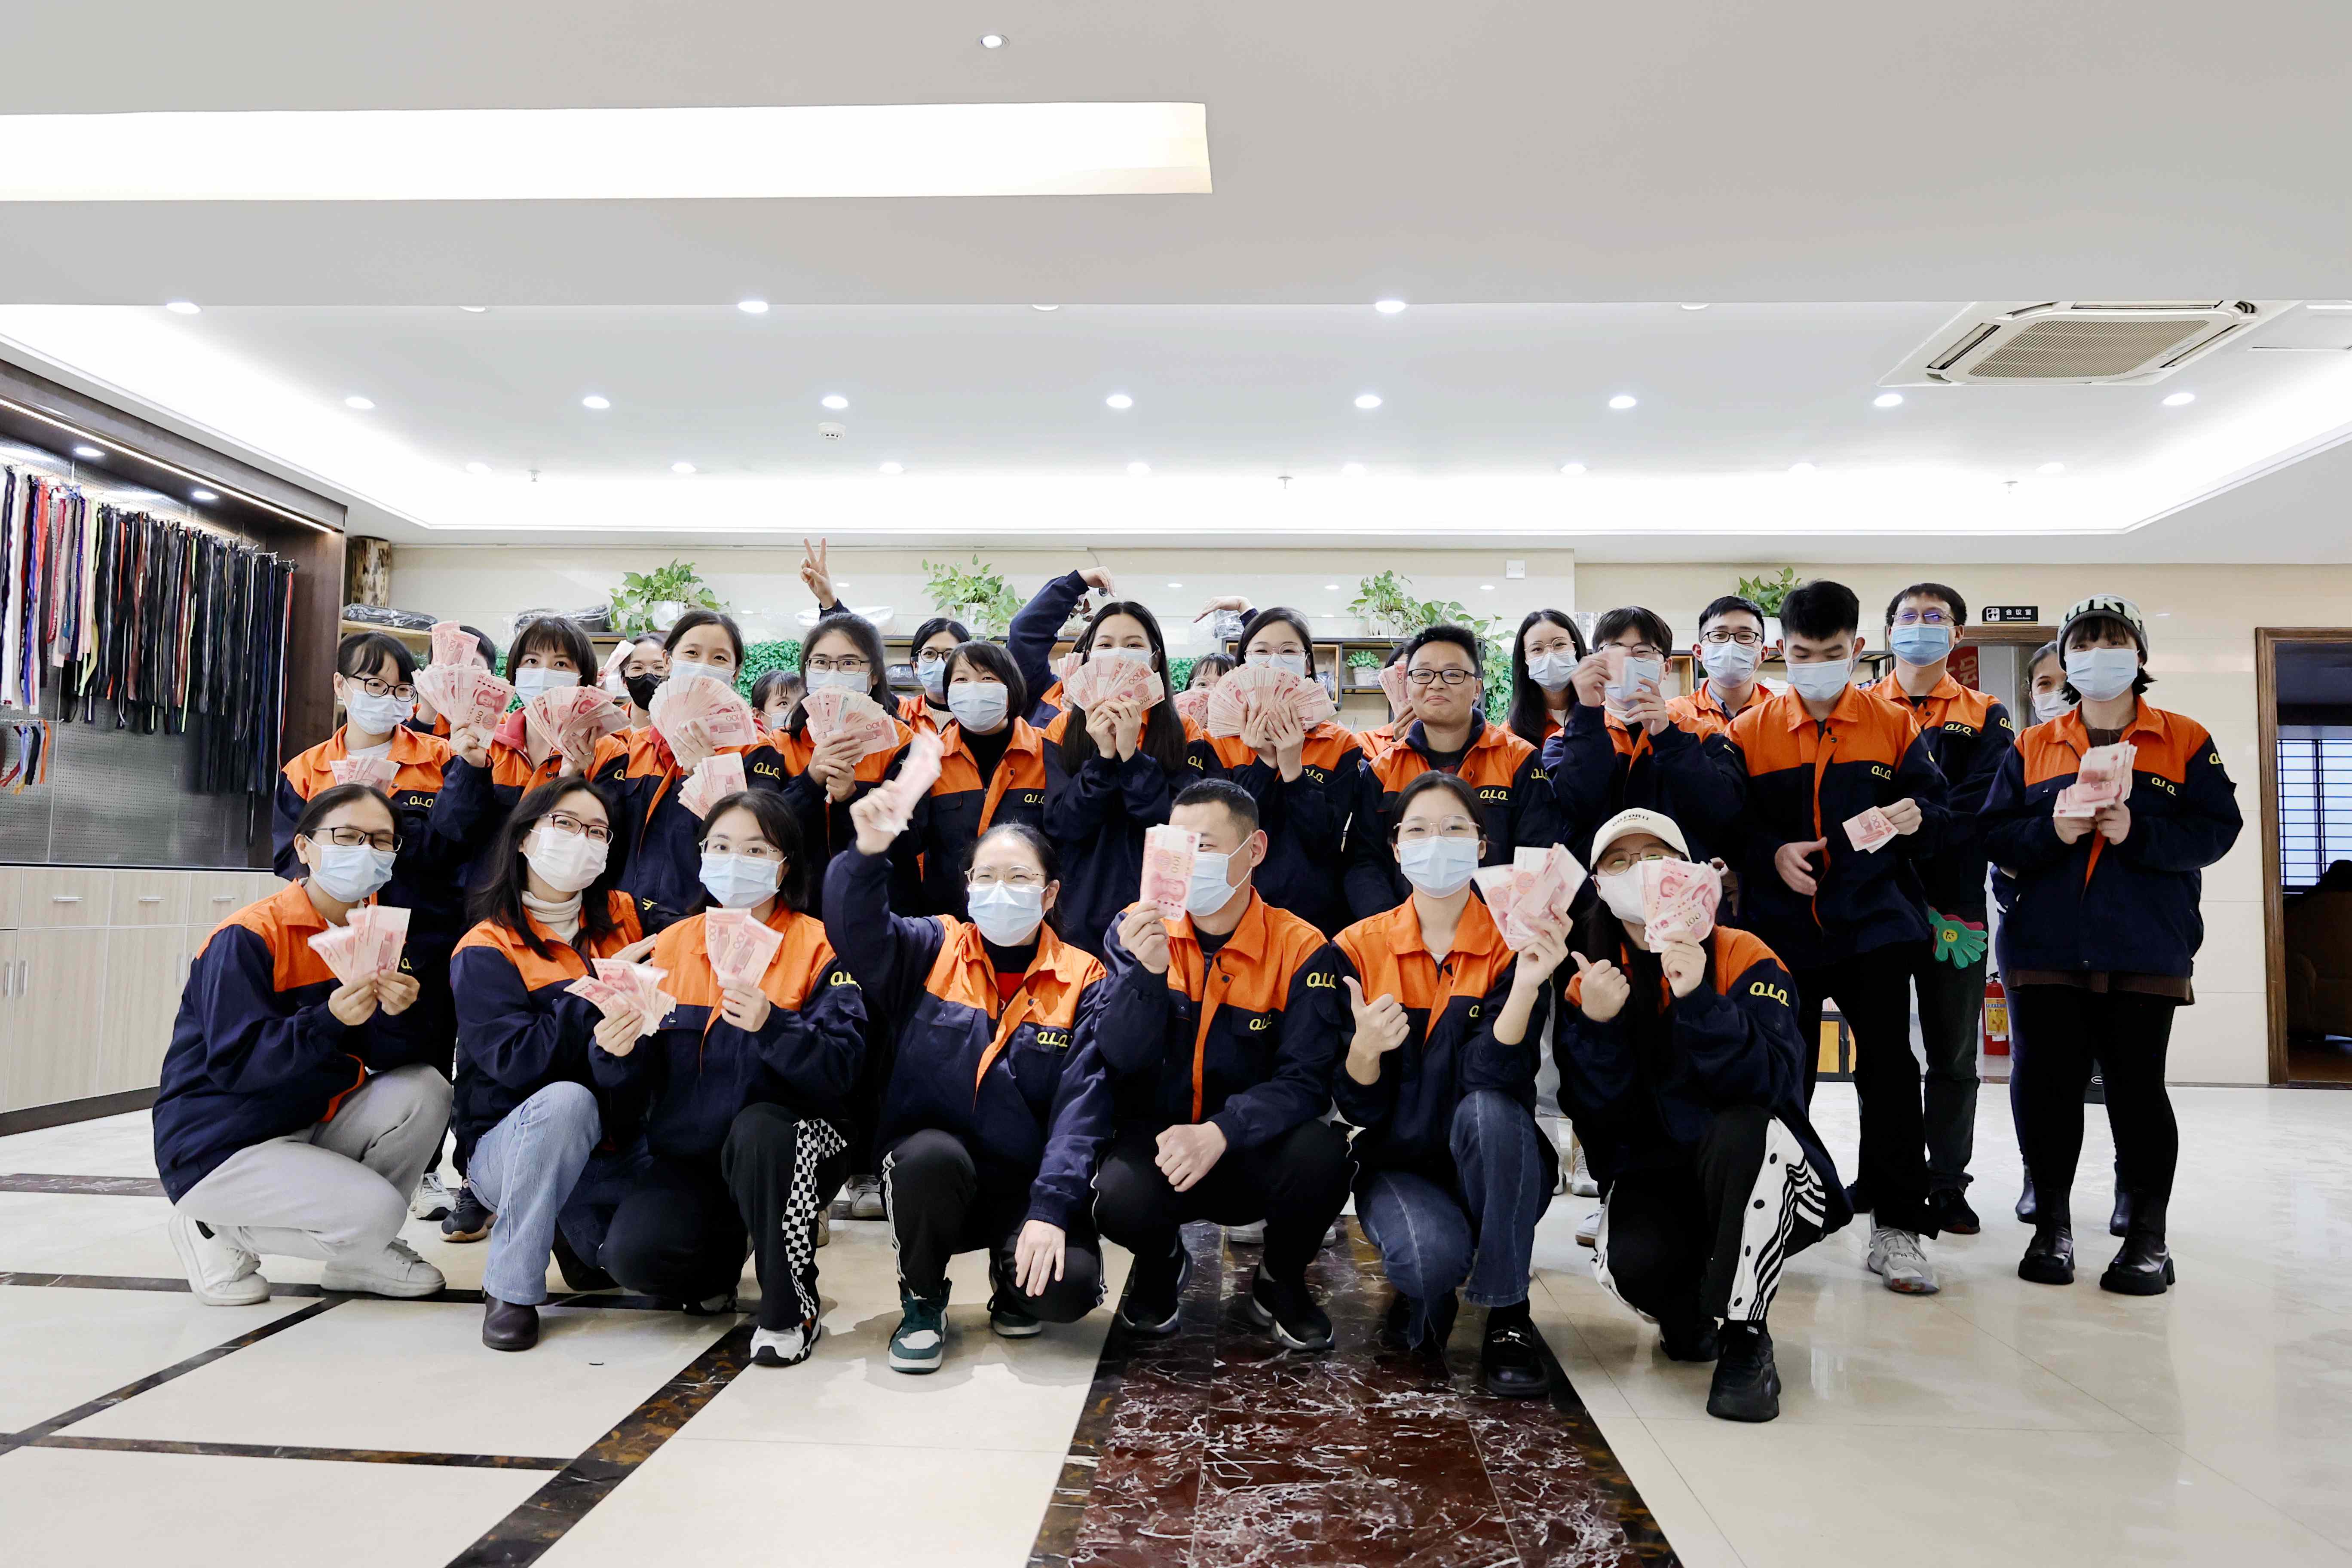 Group photo of qlq zipper after-sales service team